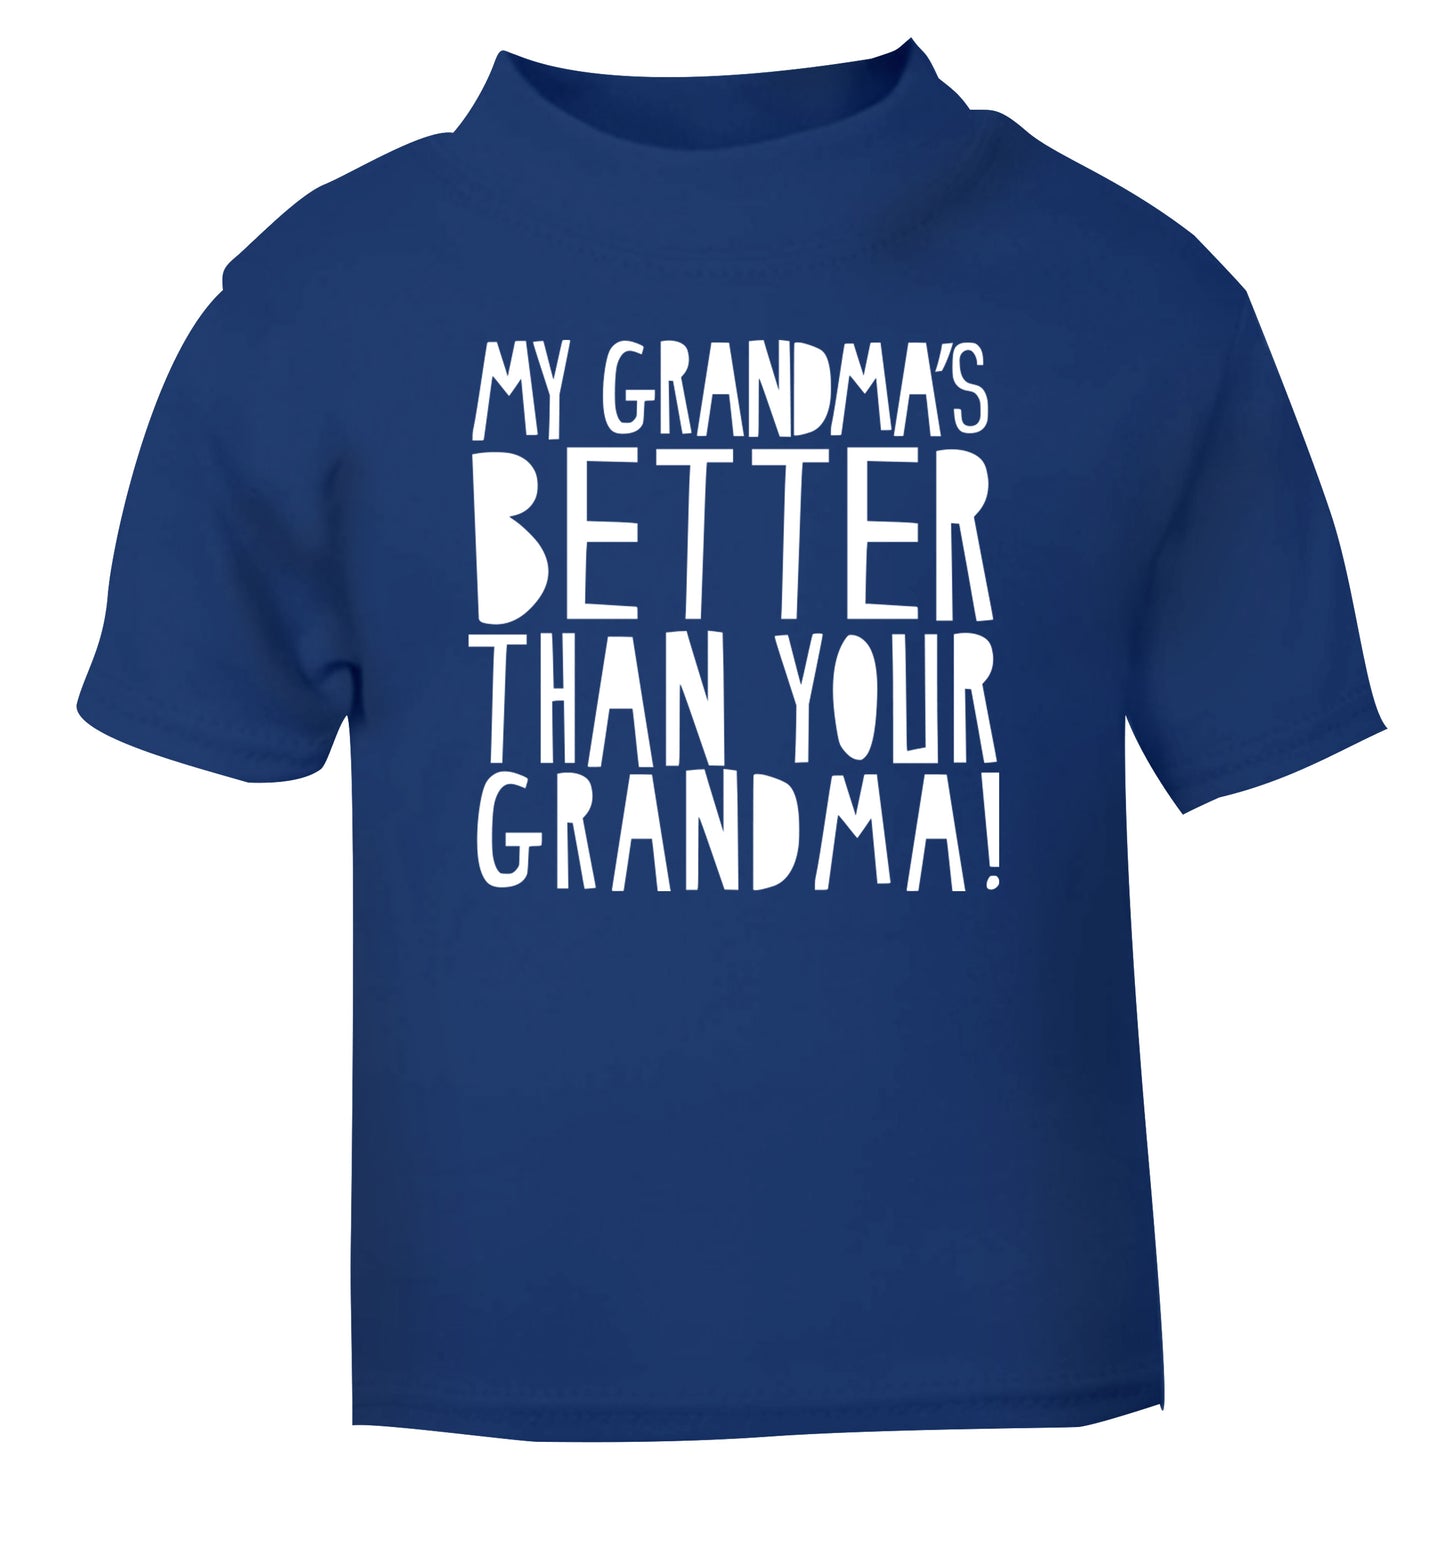 My grandma's better than your grandma blue Baby Toddler Tshirt 2 Years